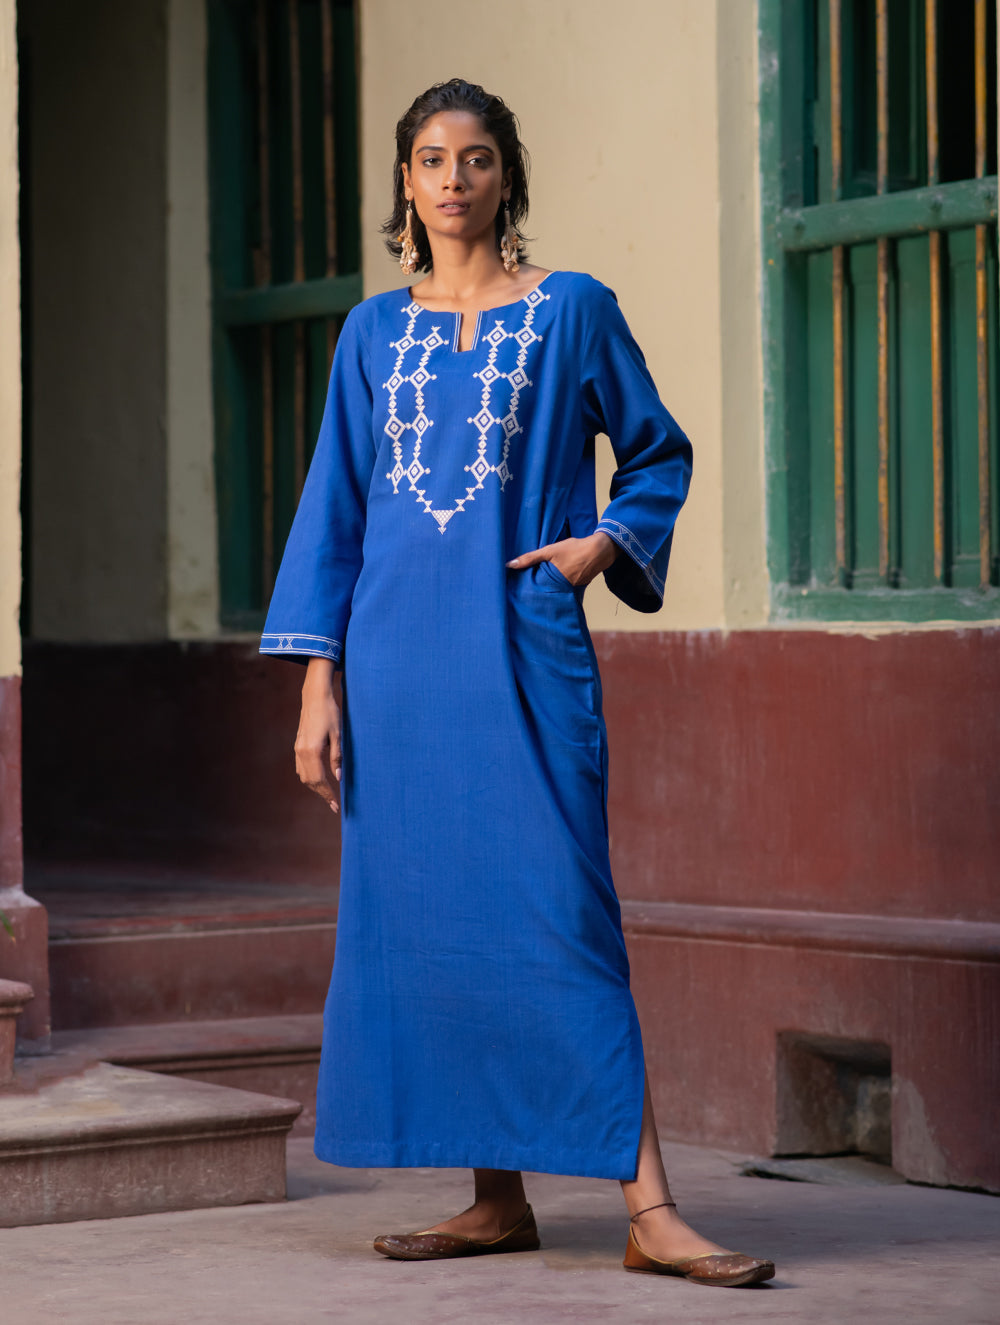 Load image into Gallery viewer, Handwoven Elegance. Kashida Pattu Long Kaftan Dress - Royal Blue